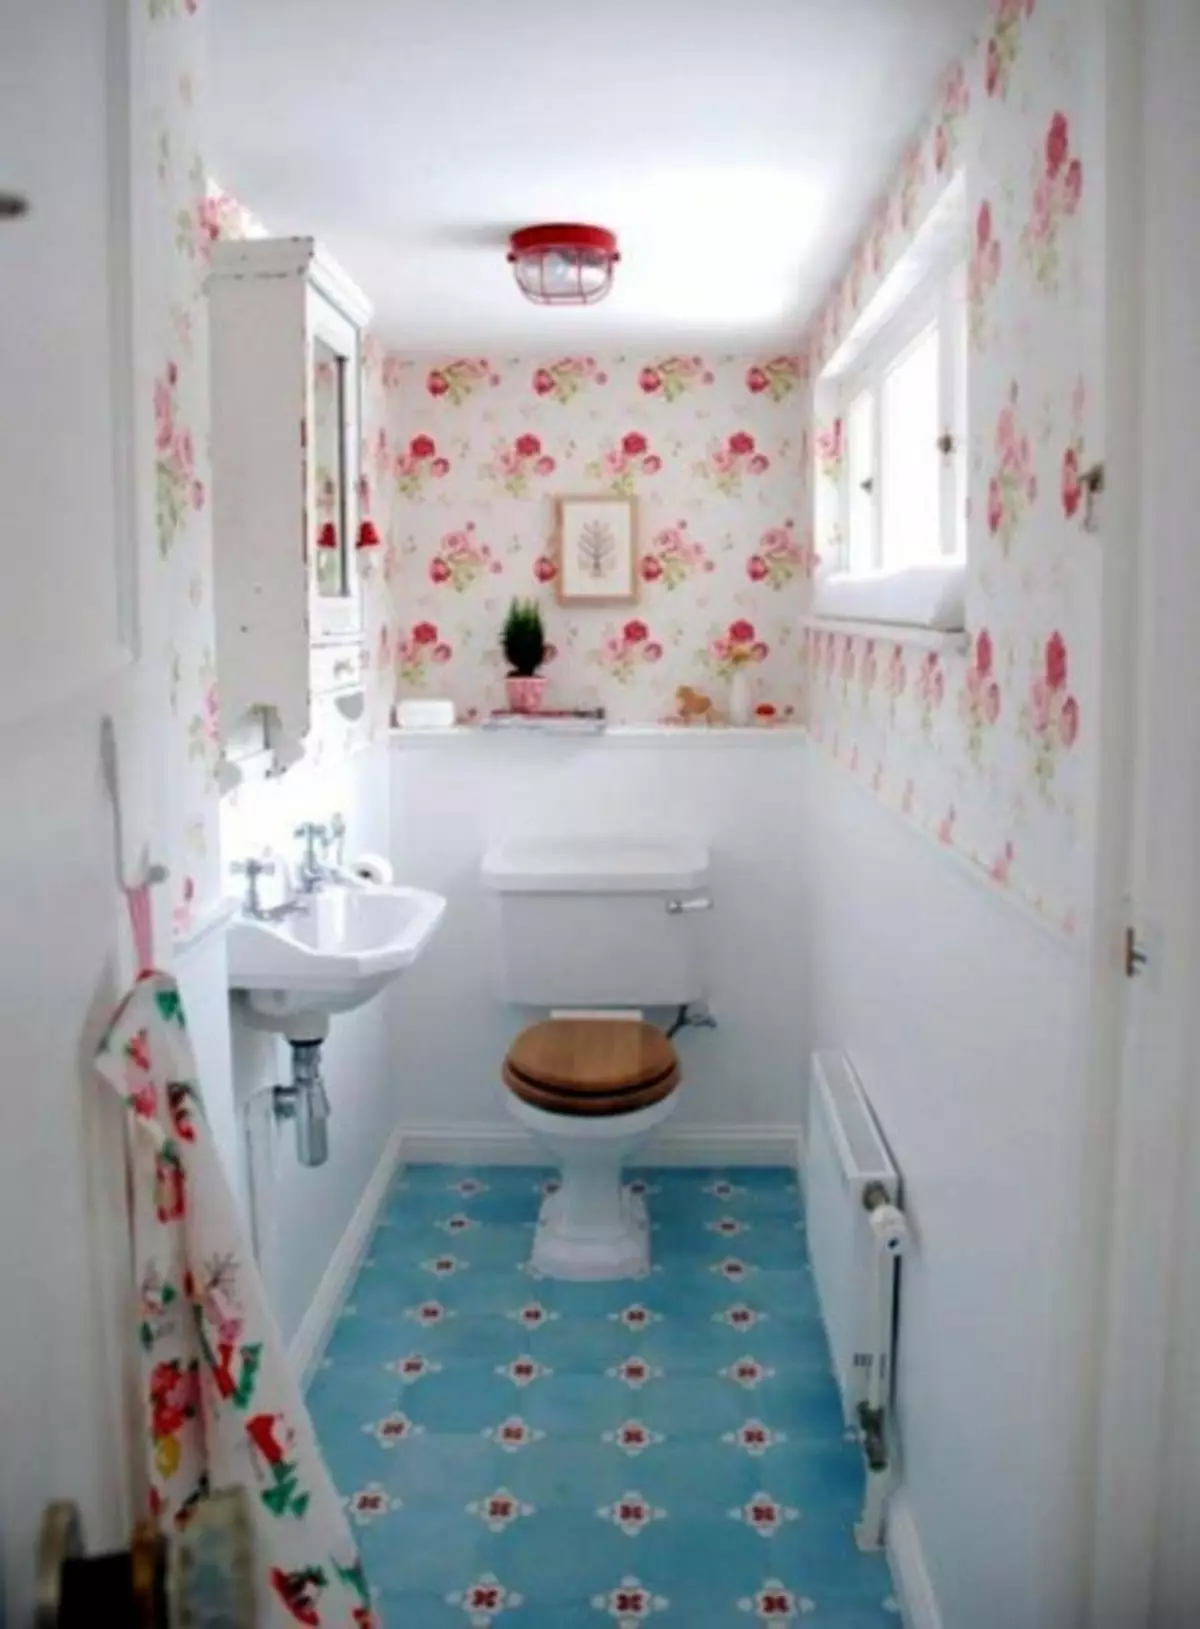 Desain toilet wallpaper